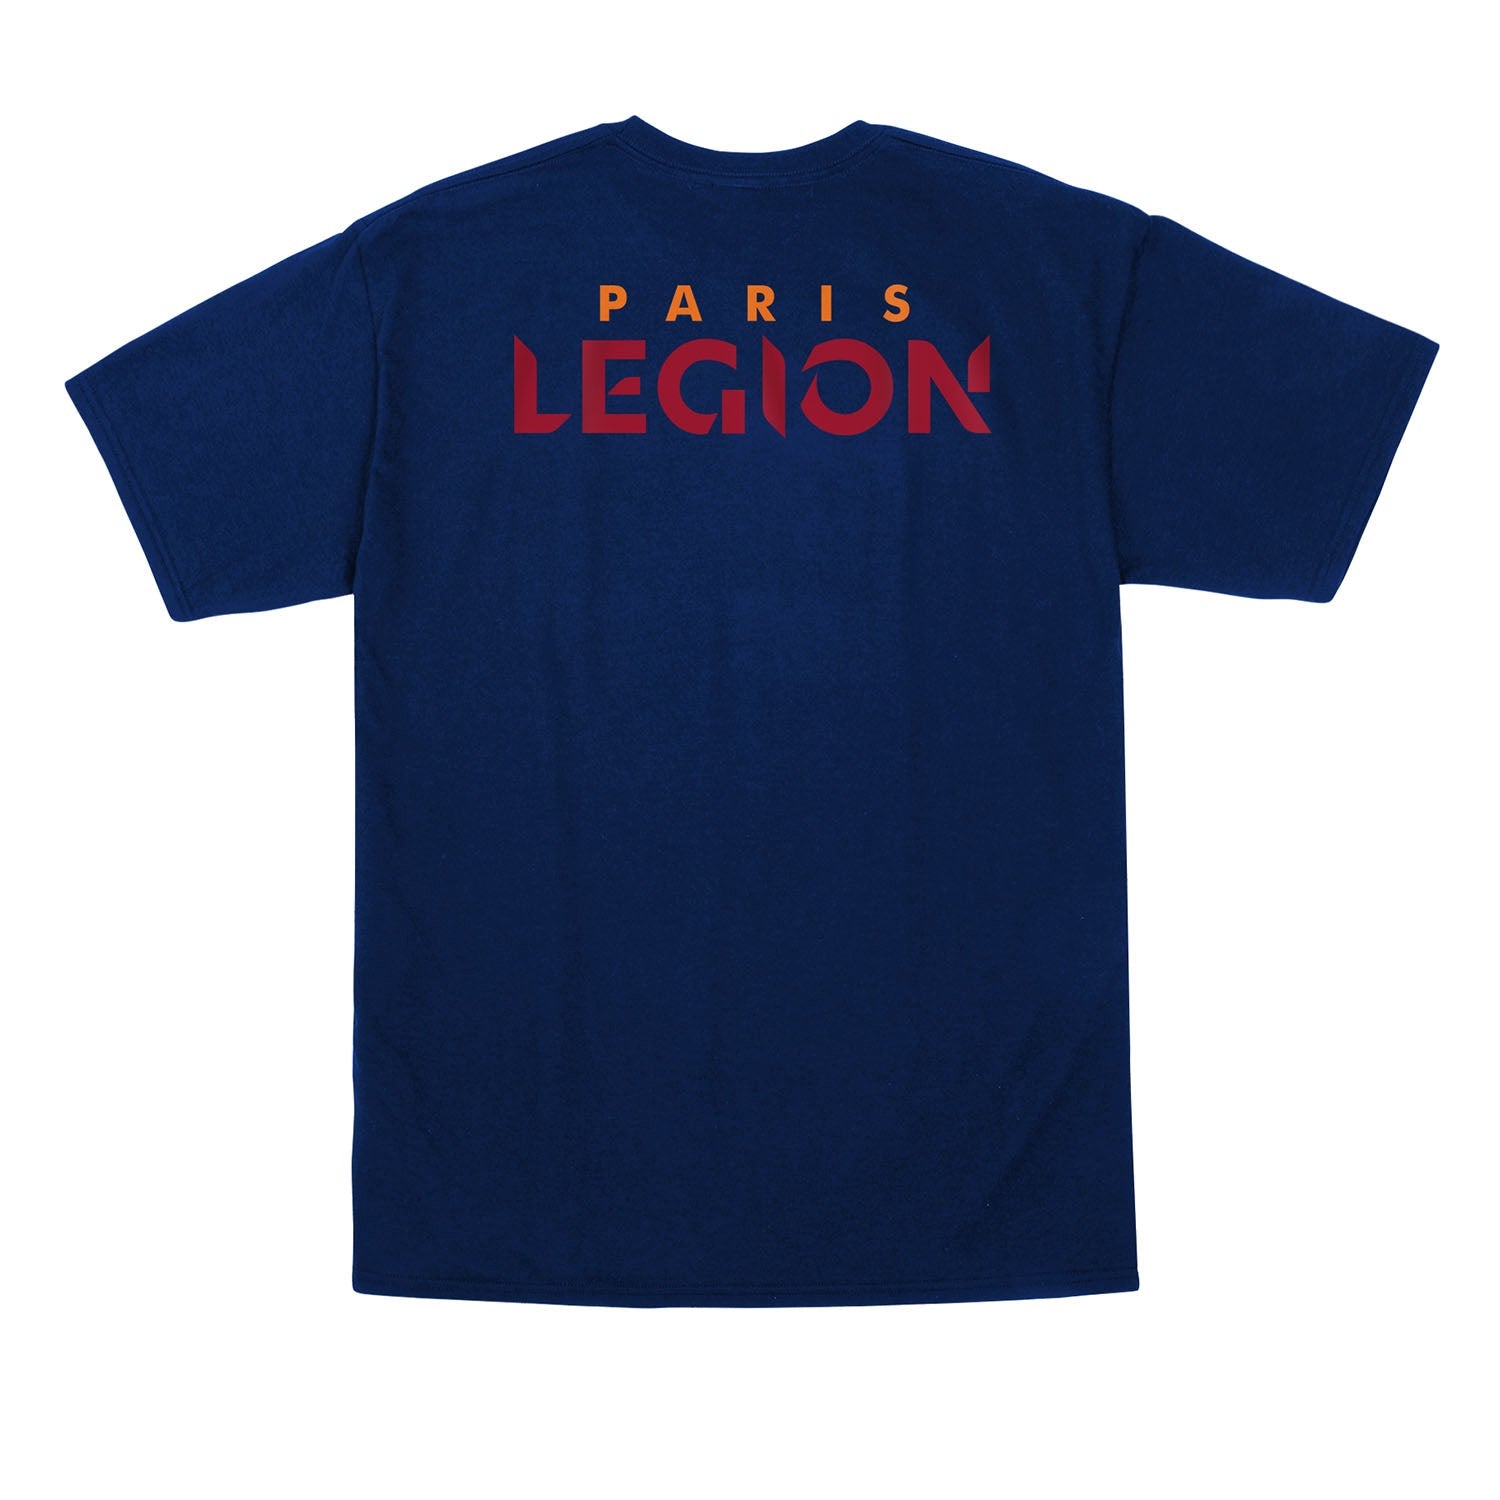 Paris Legion Navy Native T-Shirt - Back View